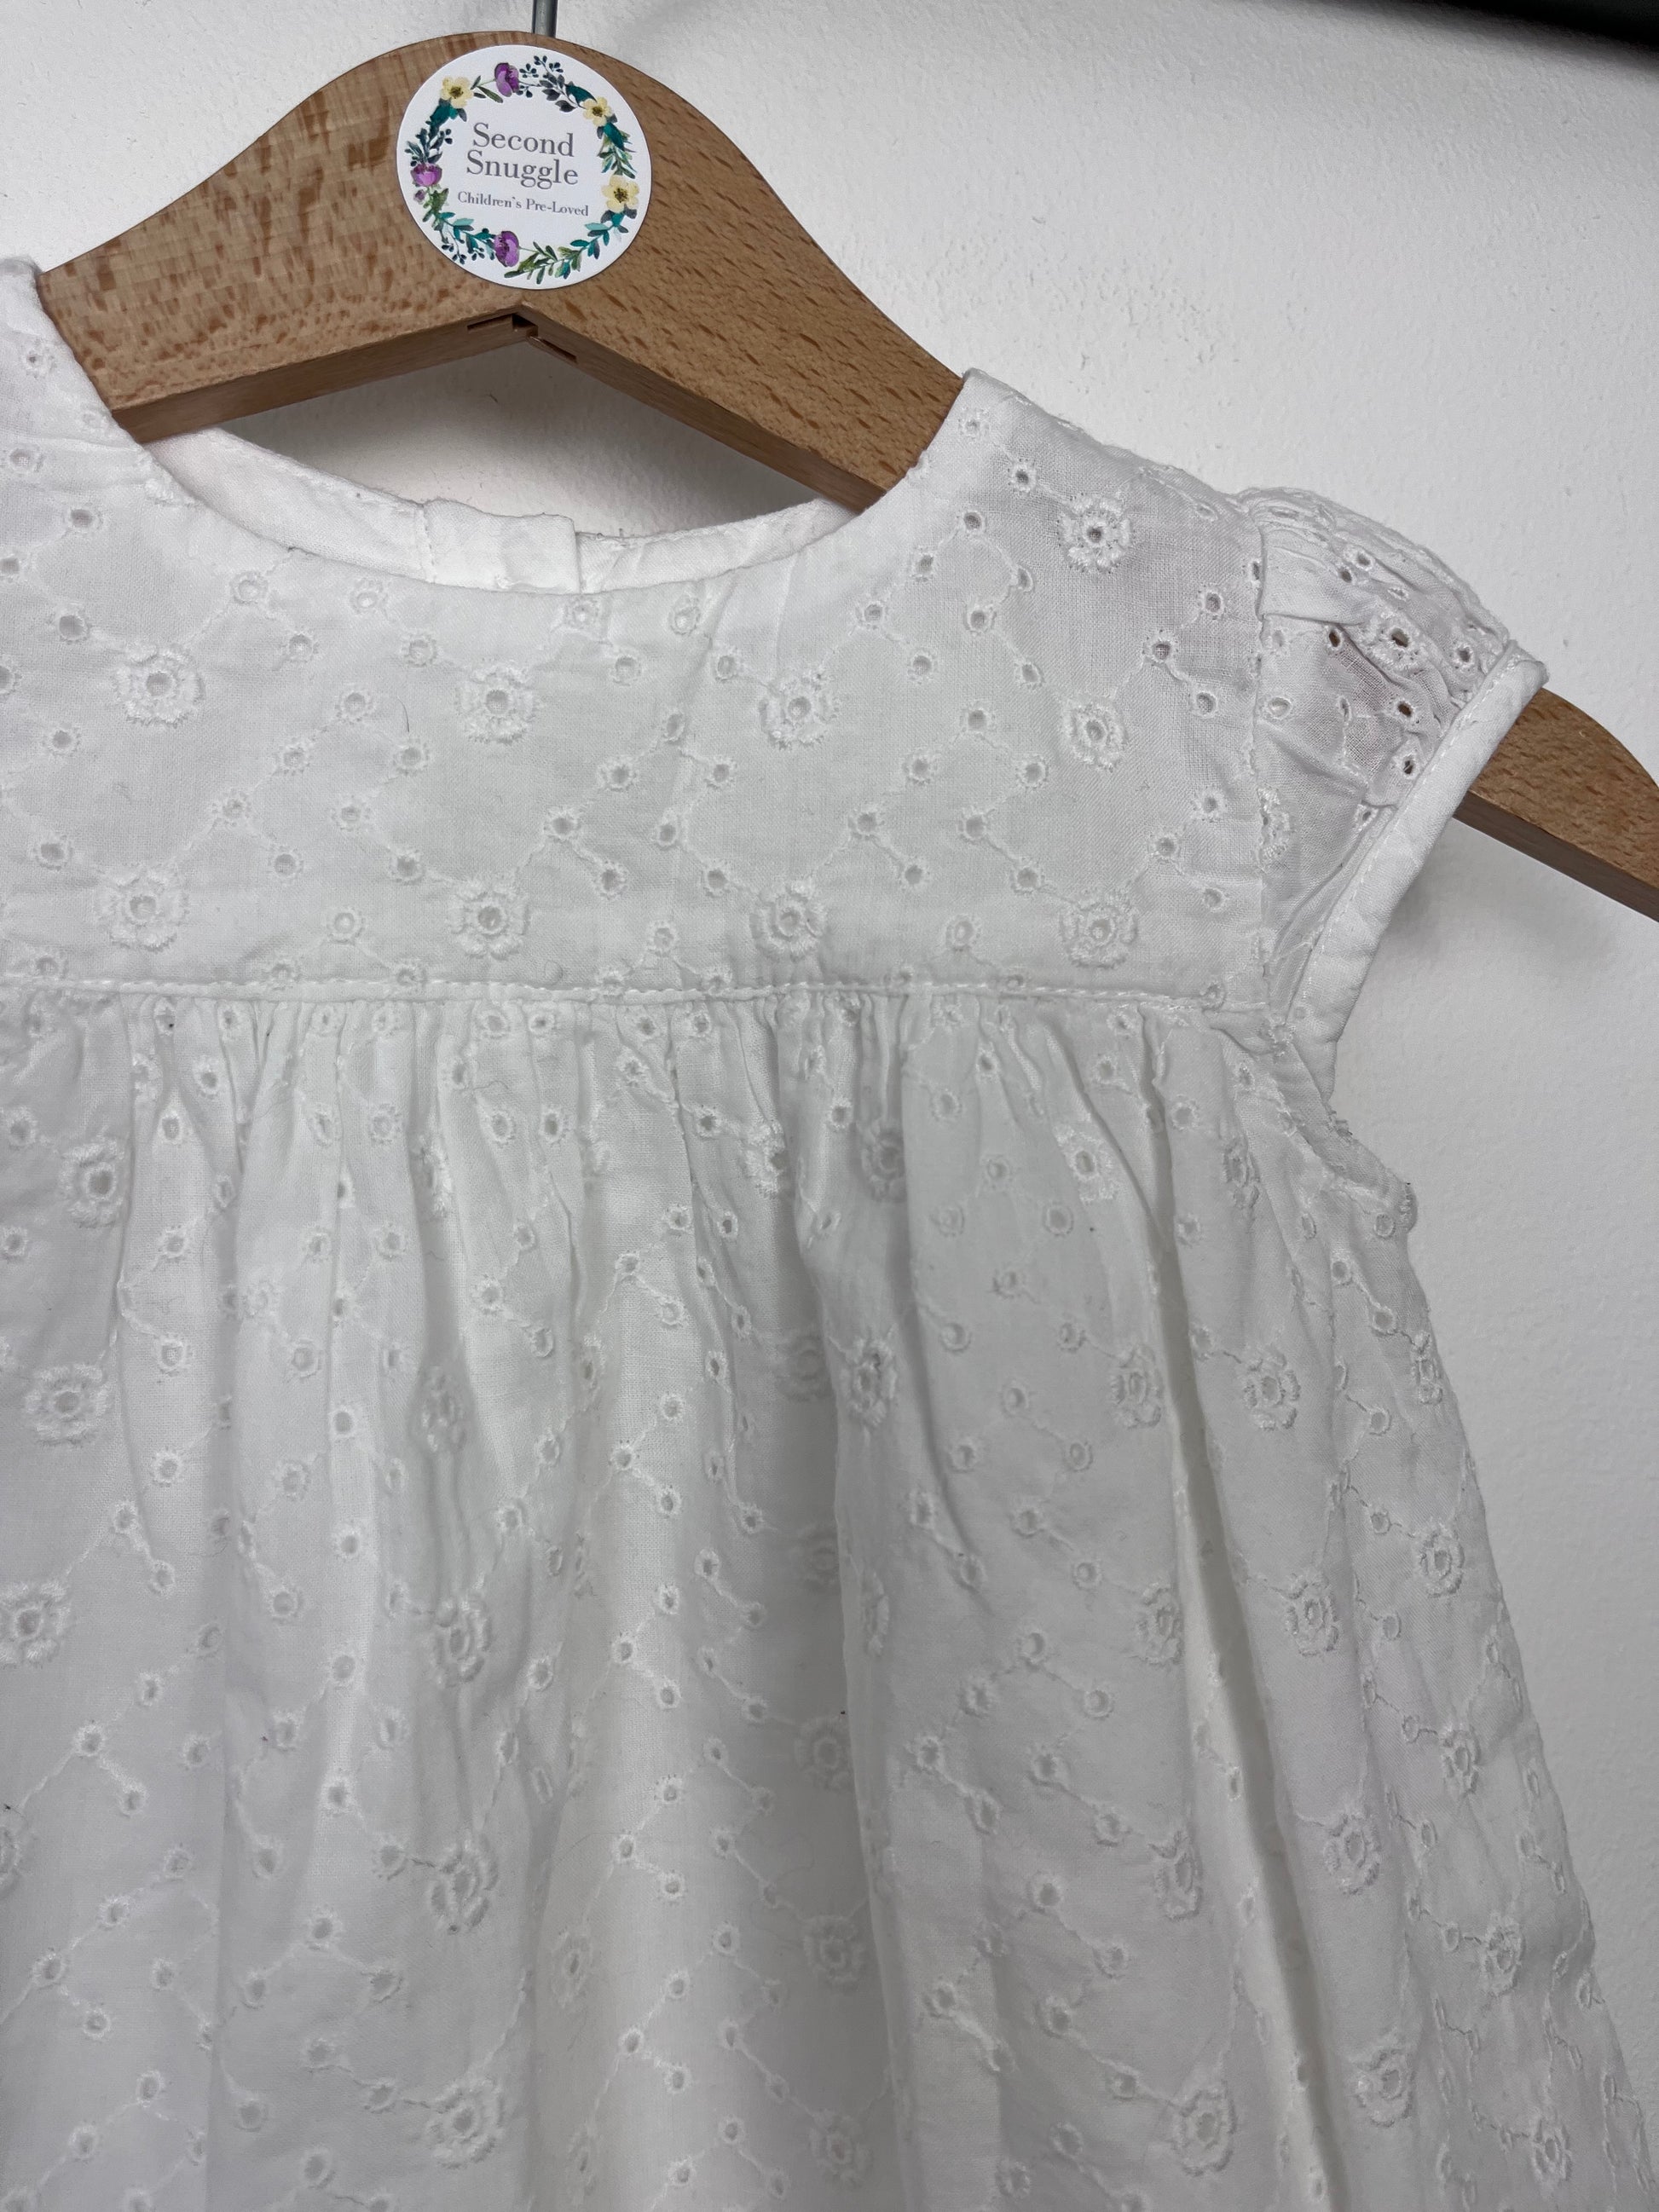 M&S 3-6 Months-Dresses-Second Snuggle Preloved